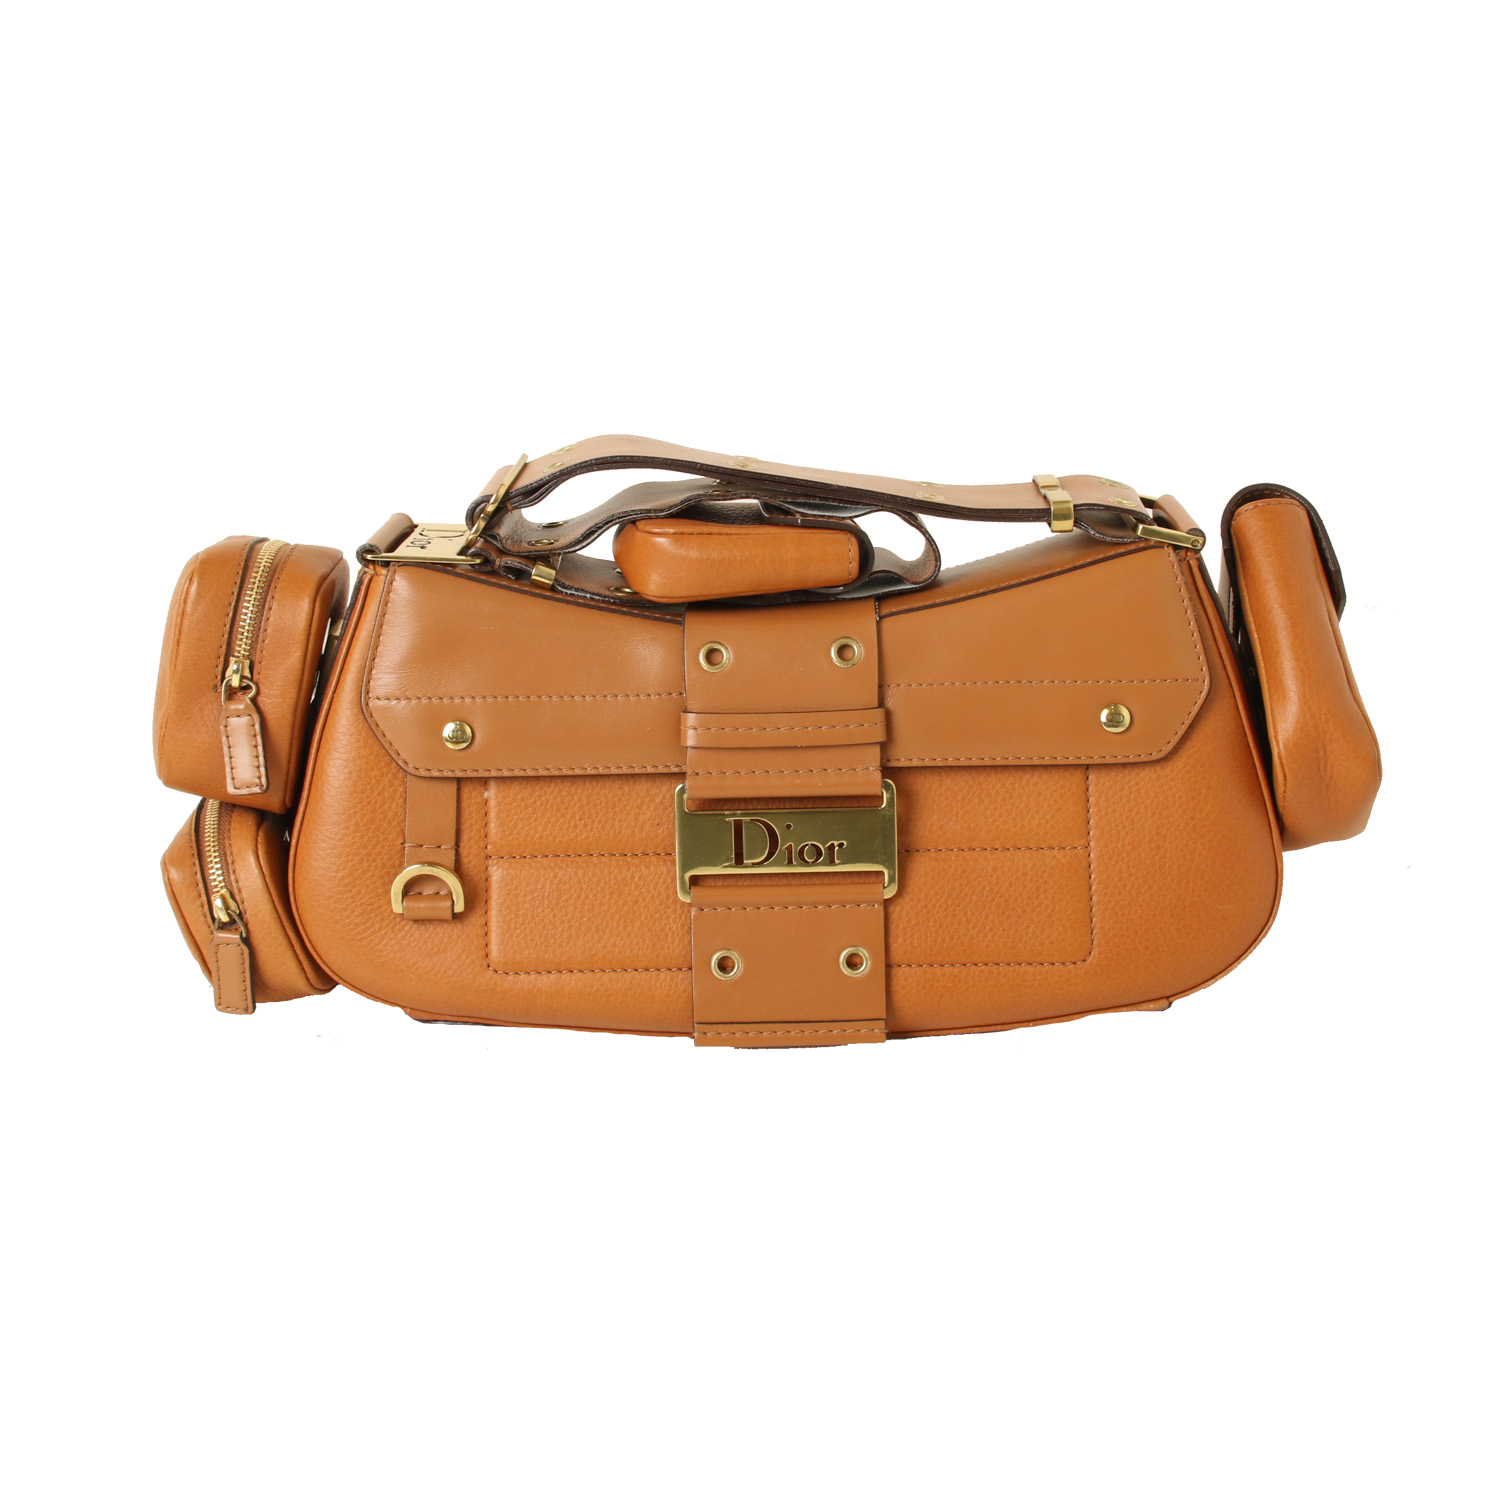 Sold at Auction: Christian Dior Bag, Christian Dior vintage brown